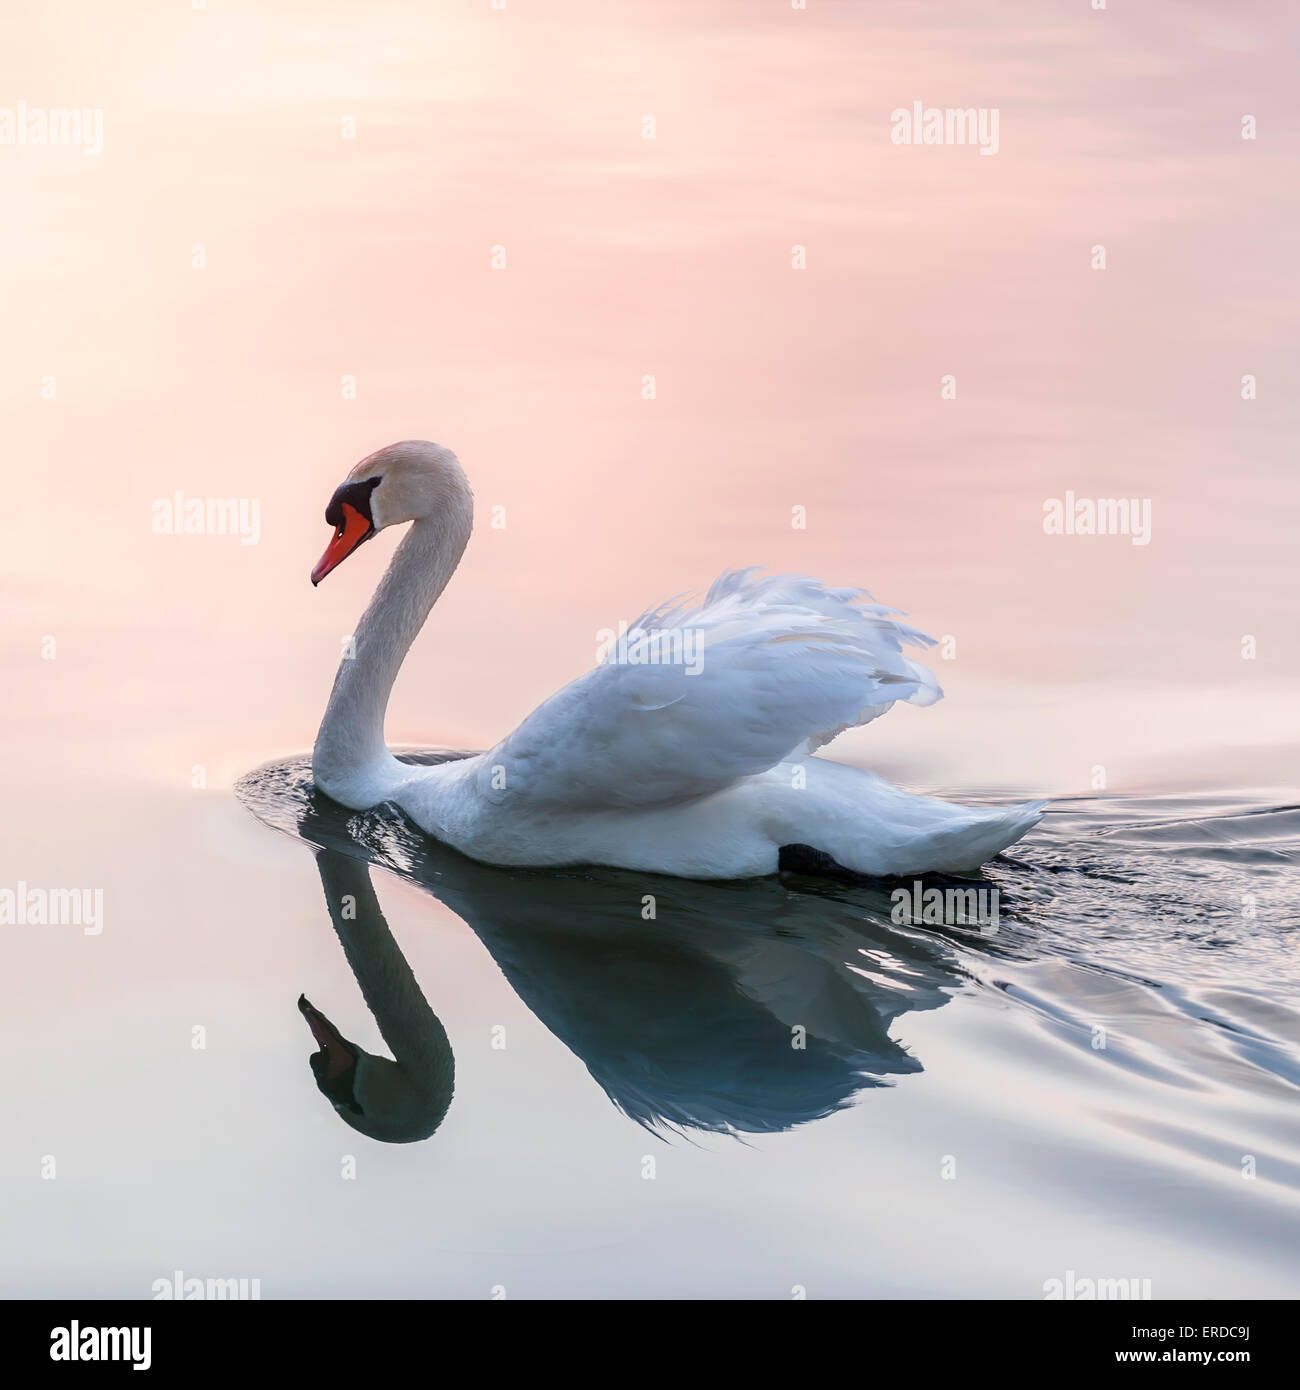 White swan swimming on lake water surface reflecting pink sunset, square format. Stock Photo